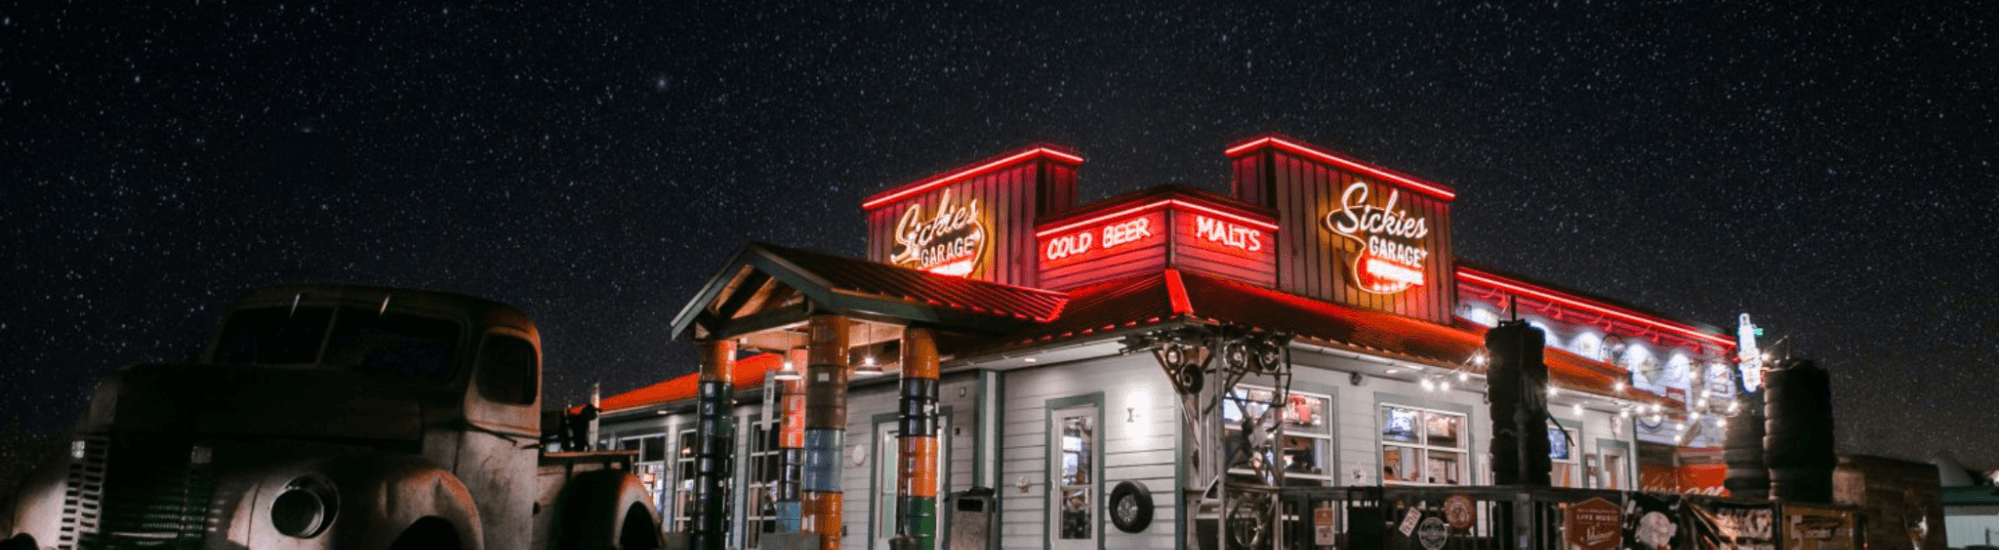 Sickies Garage restaurant lit up at night